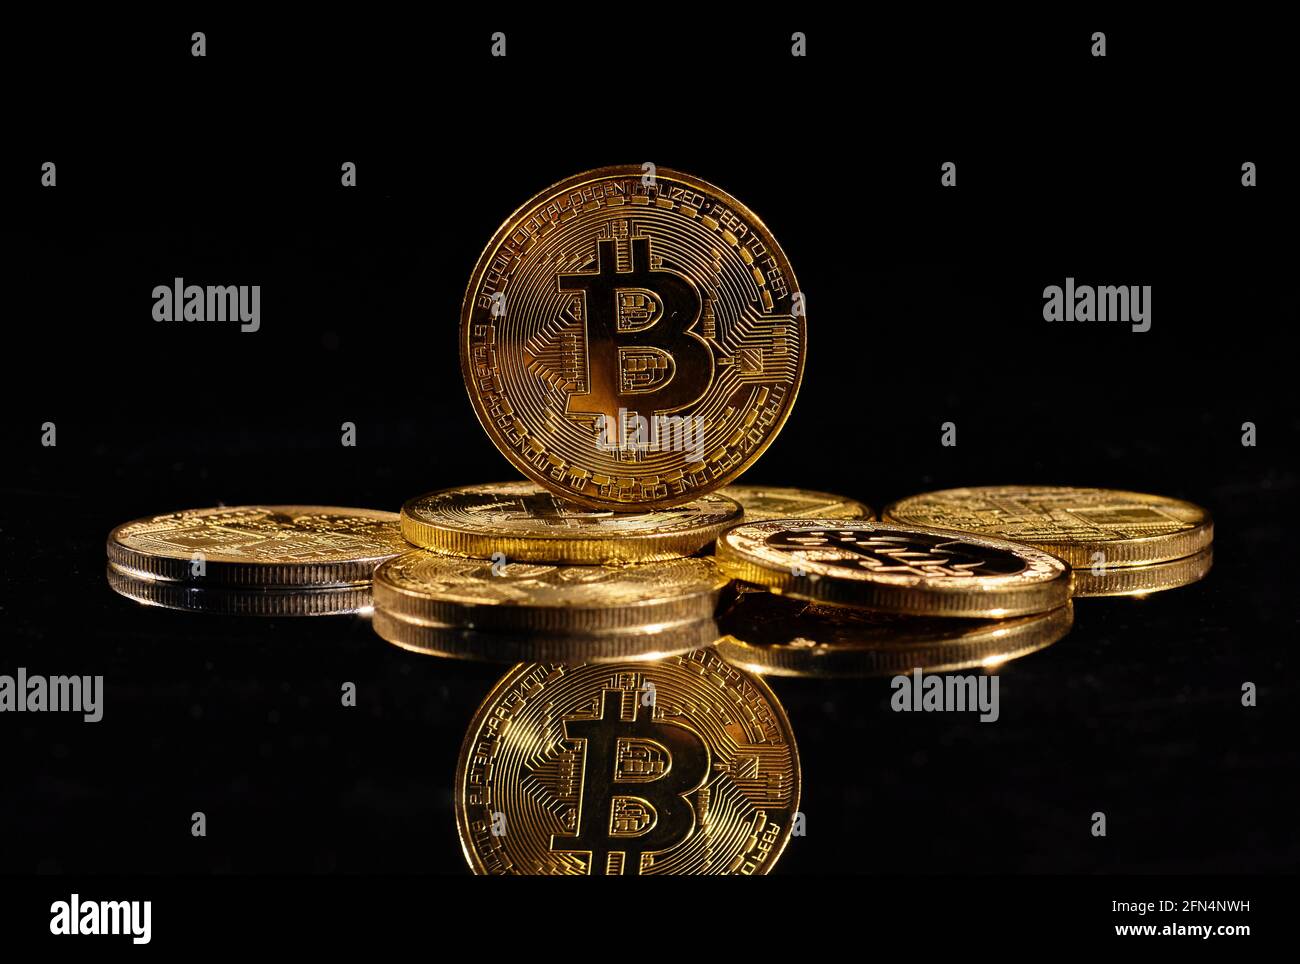 Биткоин лидер amazon to accept bitcoins